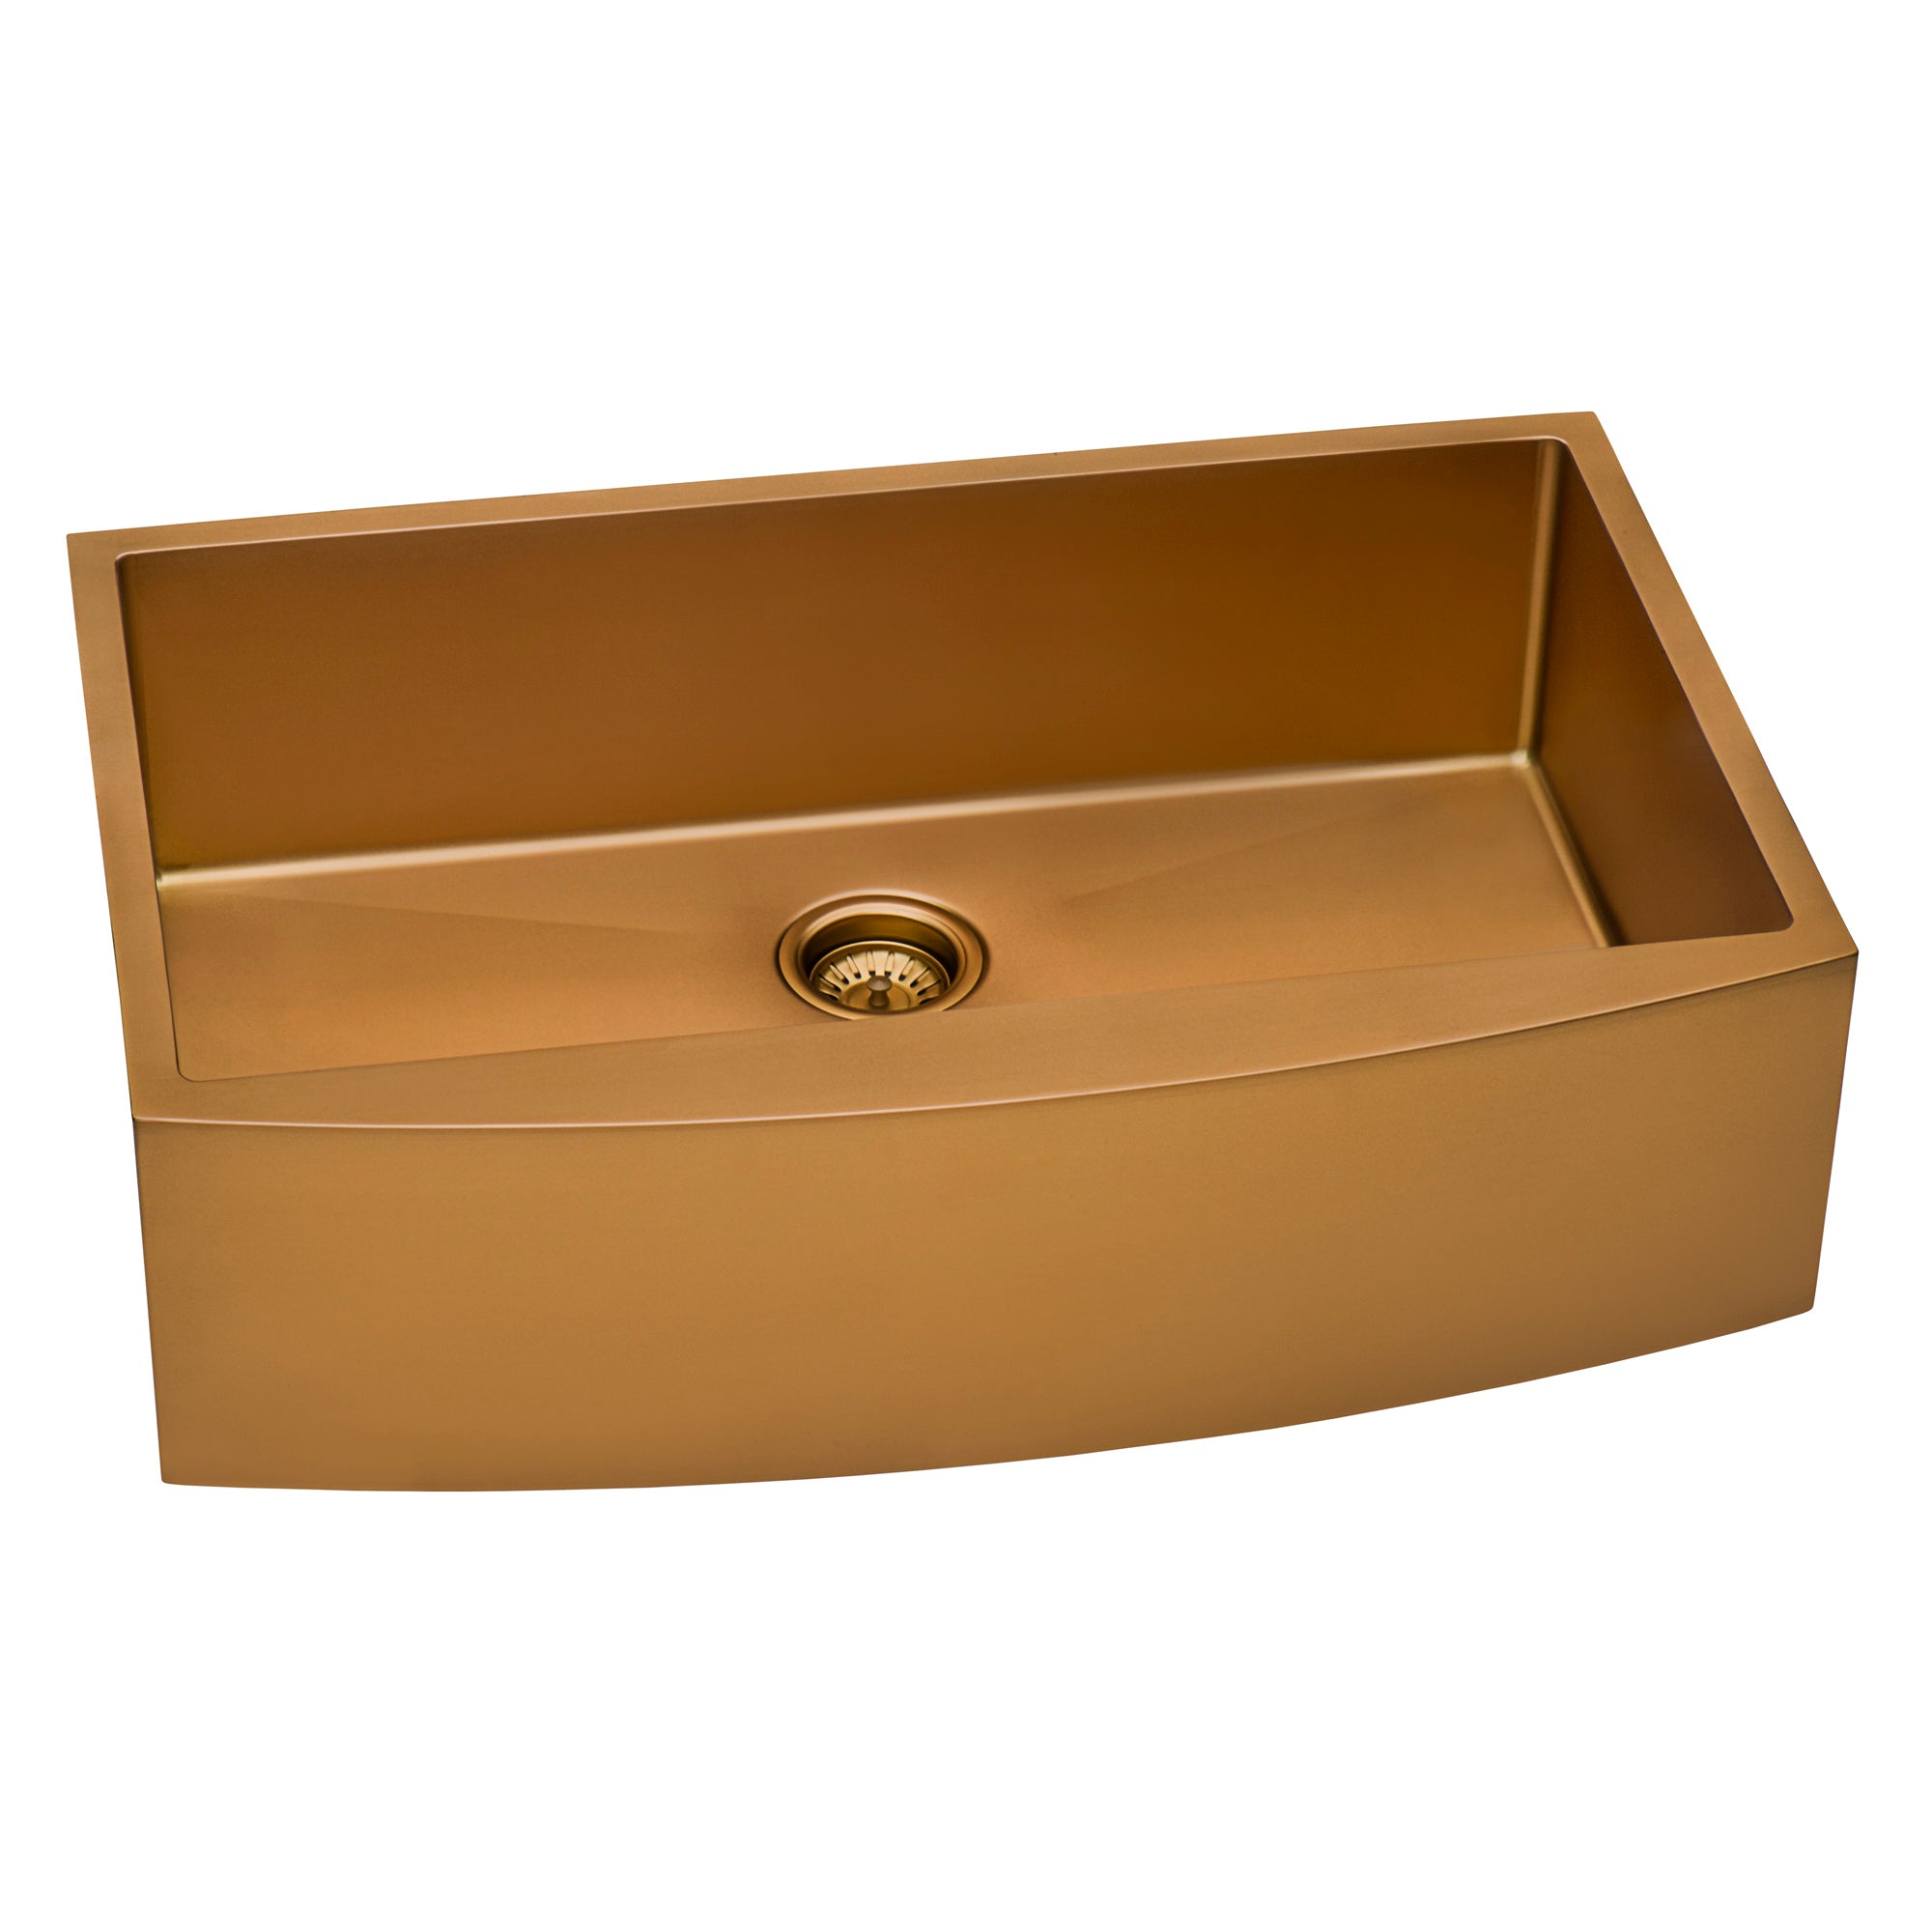 Ruvati 30" Copper Tone Matte Bronze Apron Front Stainless Steel Kitchen Sink